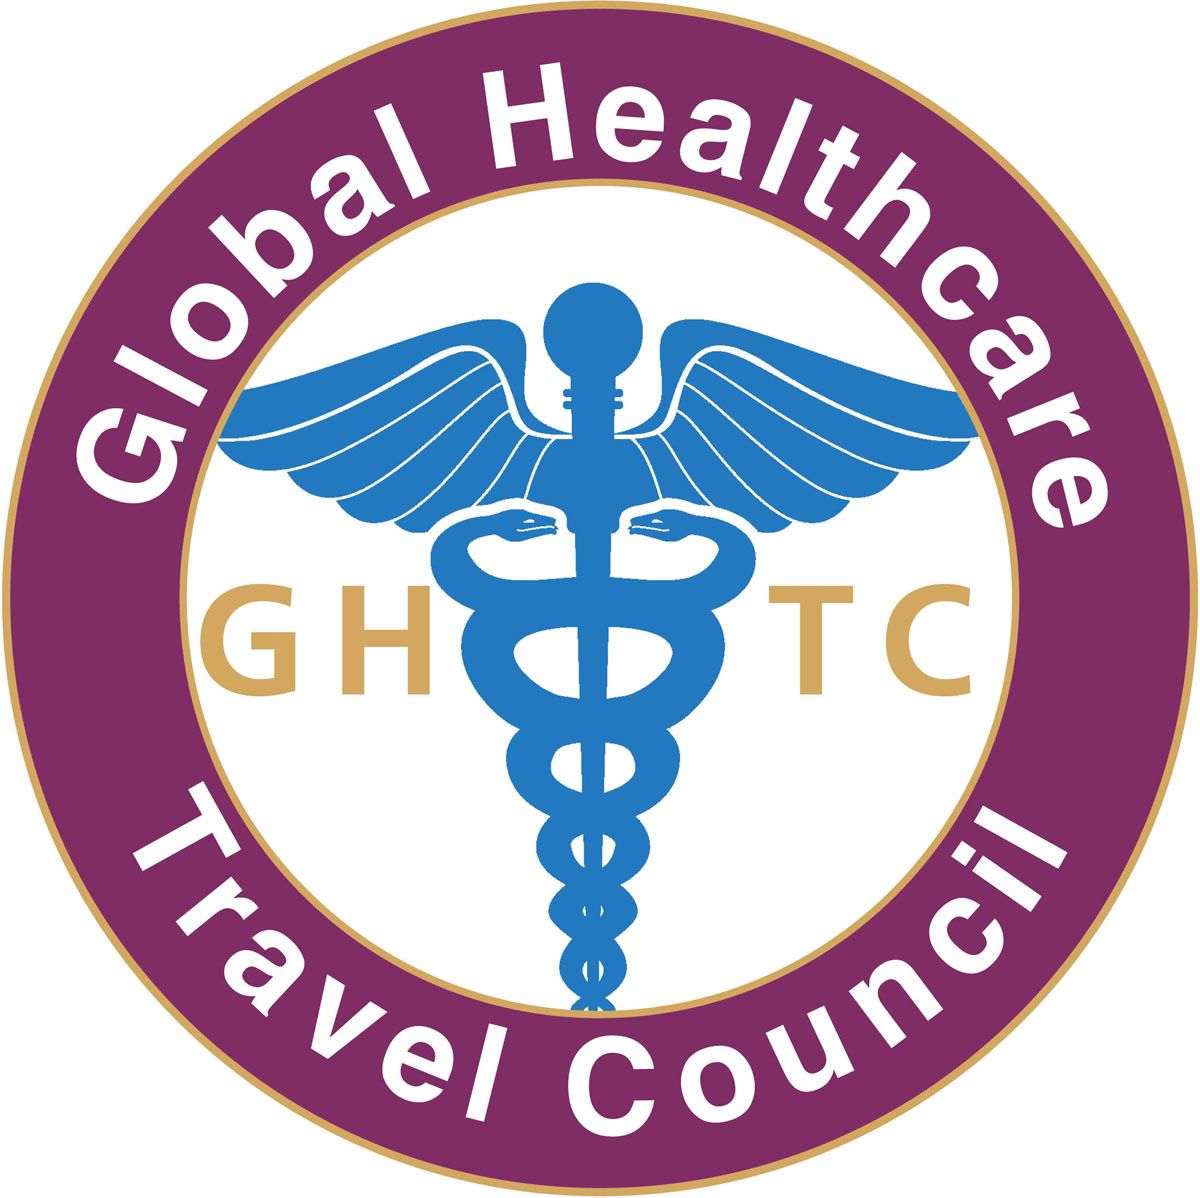 ghtc-logo-son.jpg